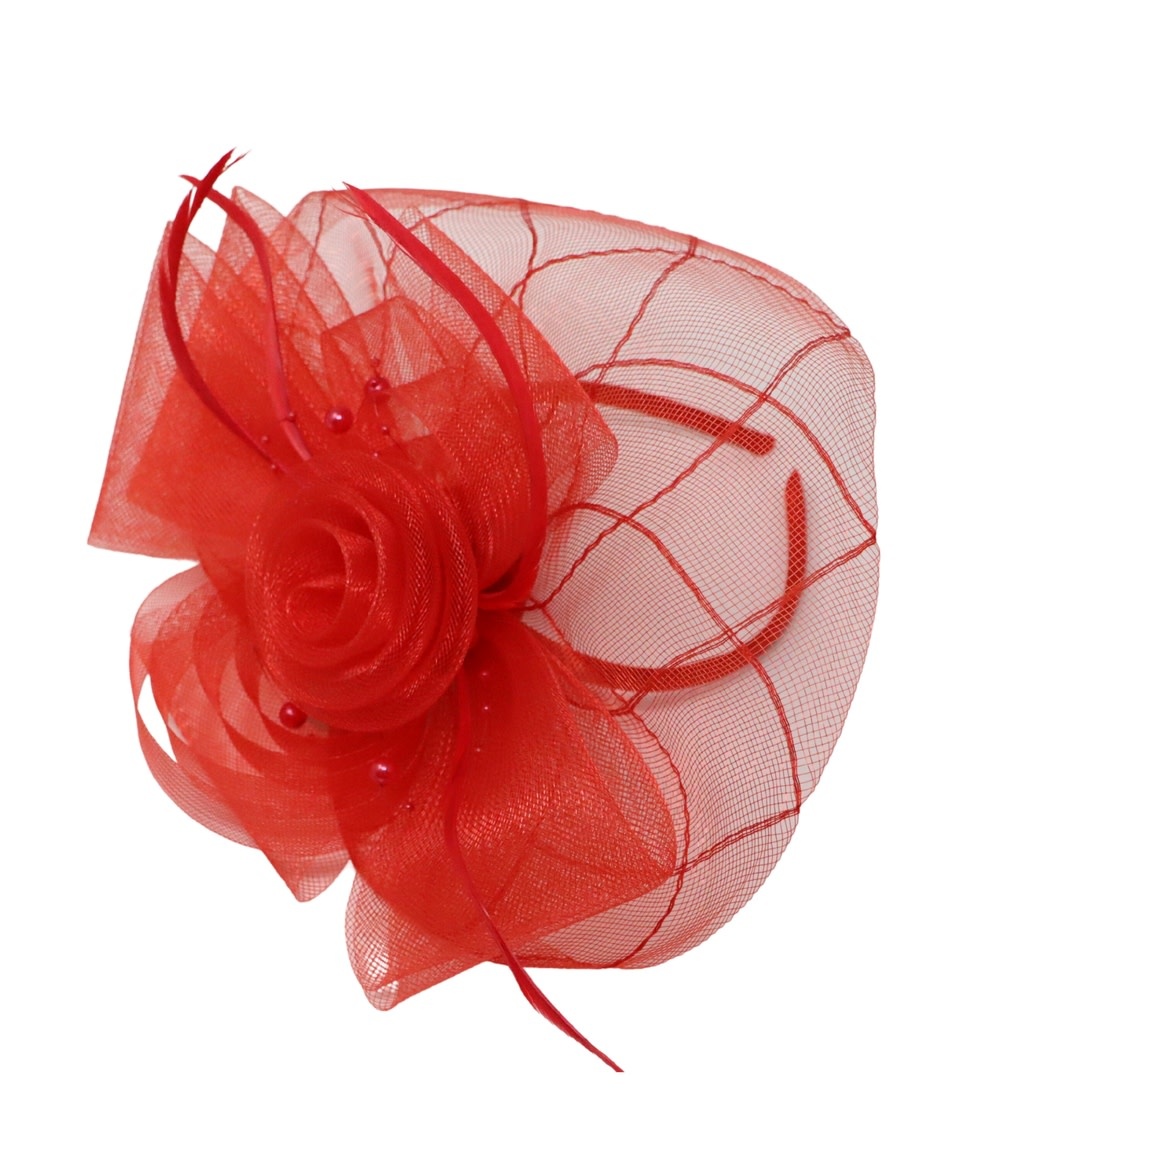 FLEURISH Red Fascinator Beaded Flower w Stitched Net